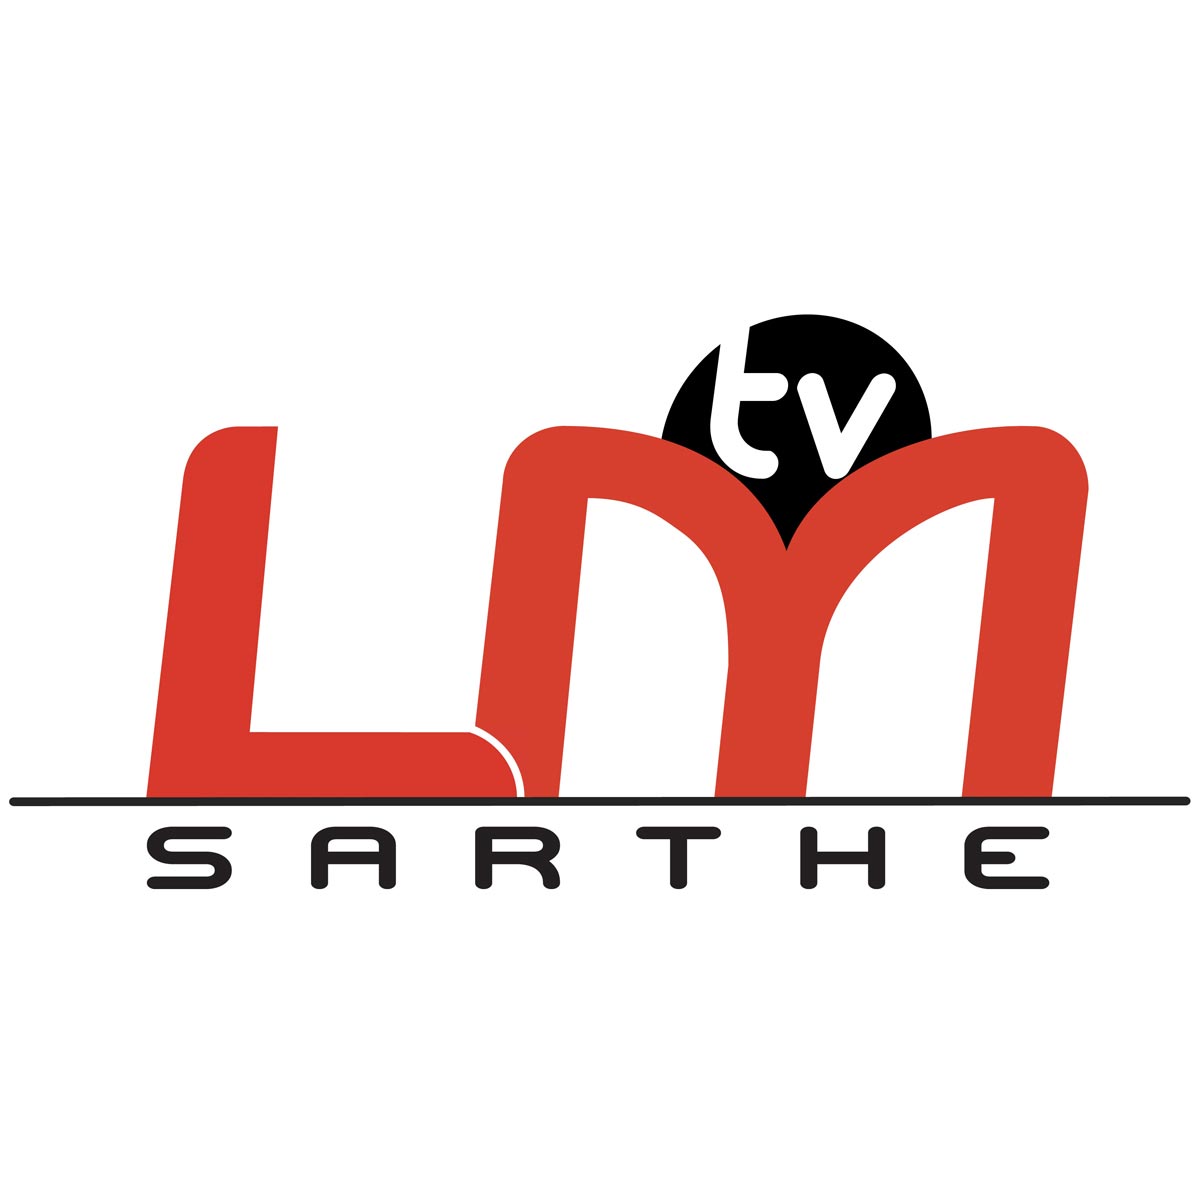 LMTV